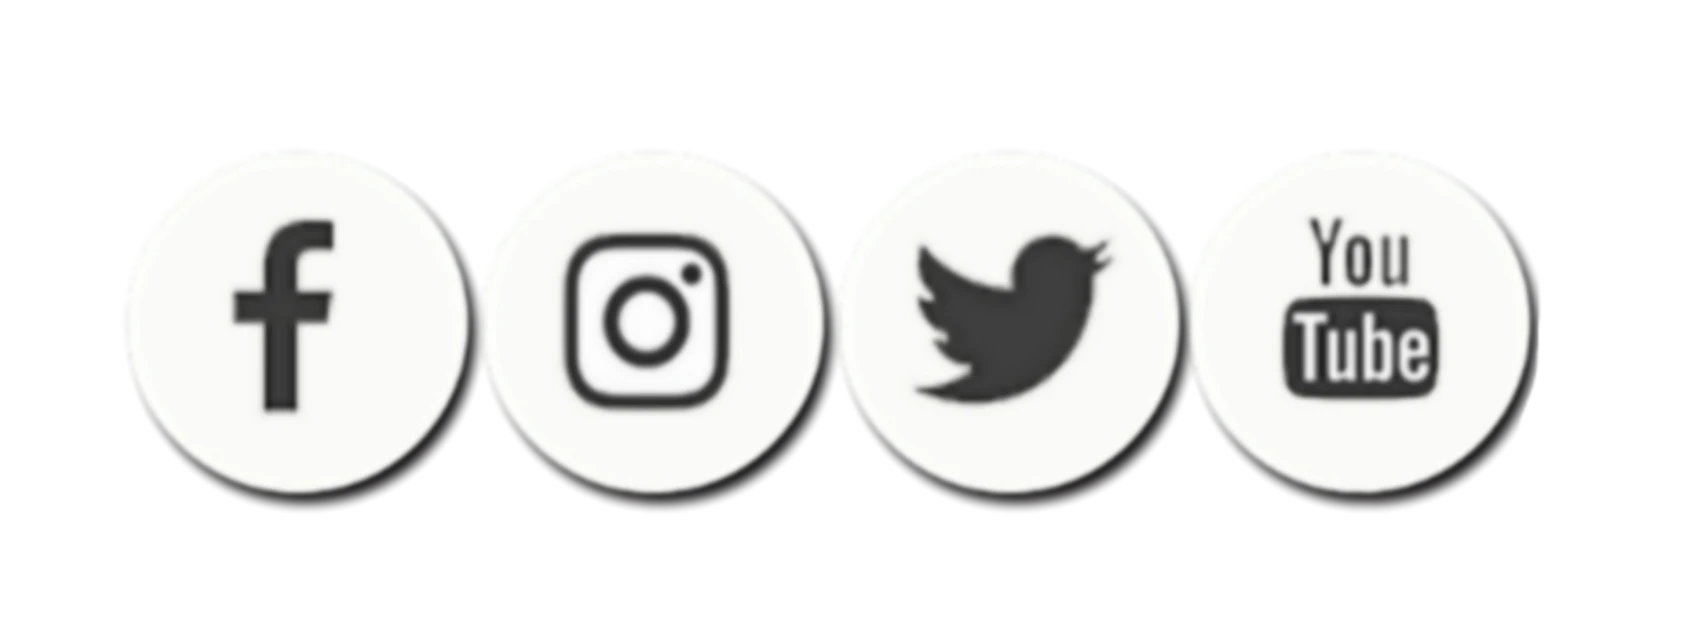 Facebook Instagram YouTube Logo PNG High-Quality Image